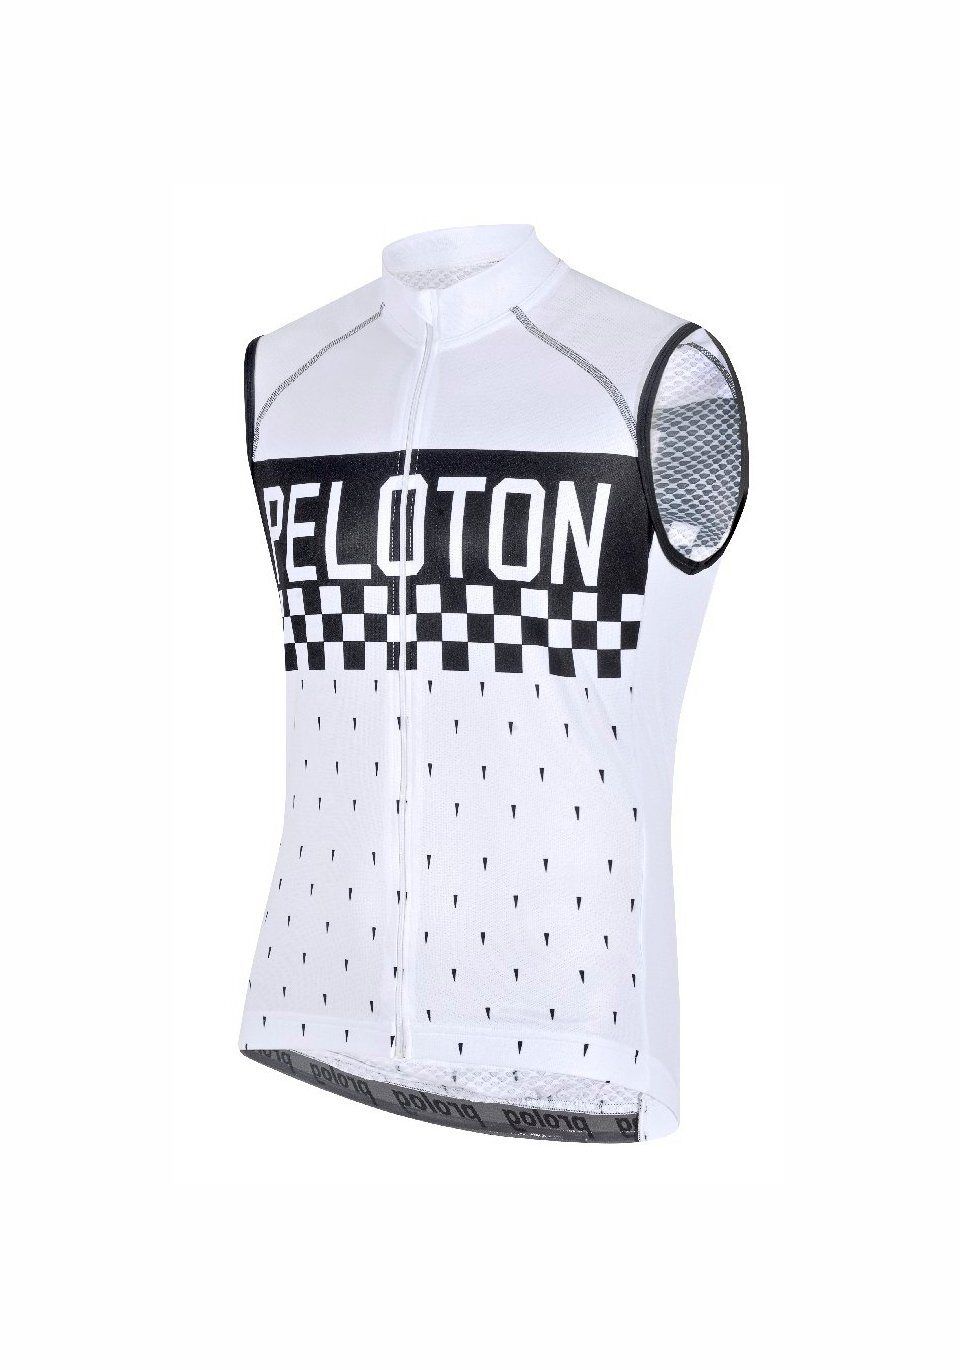 prolog cycling wear Trikot aus Coolmaxfaser